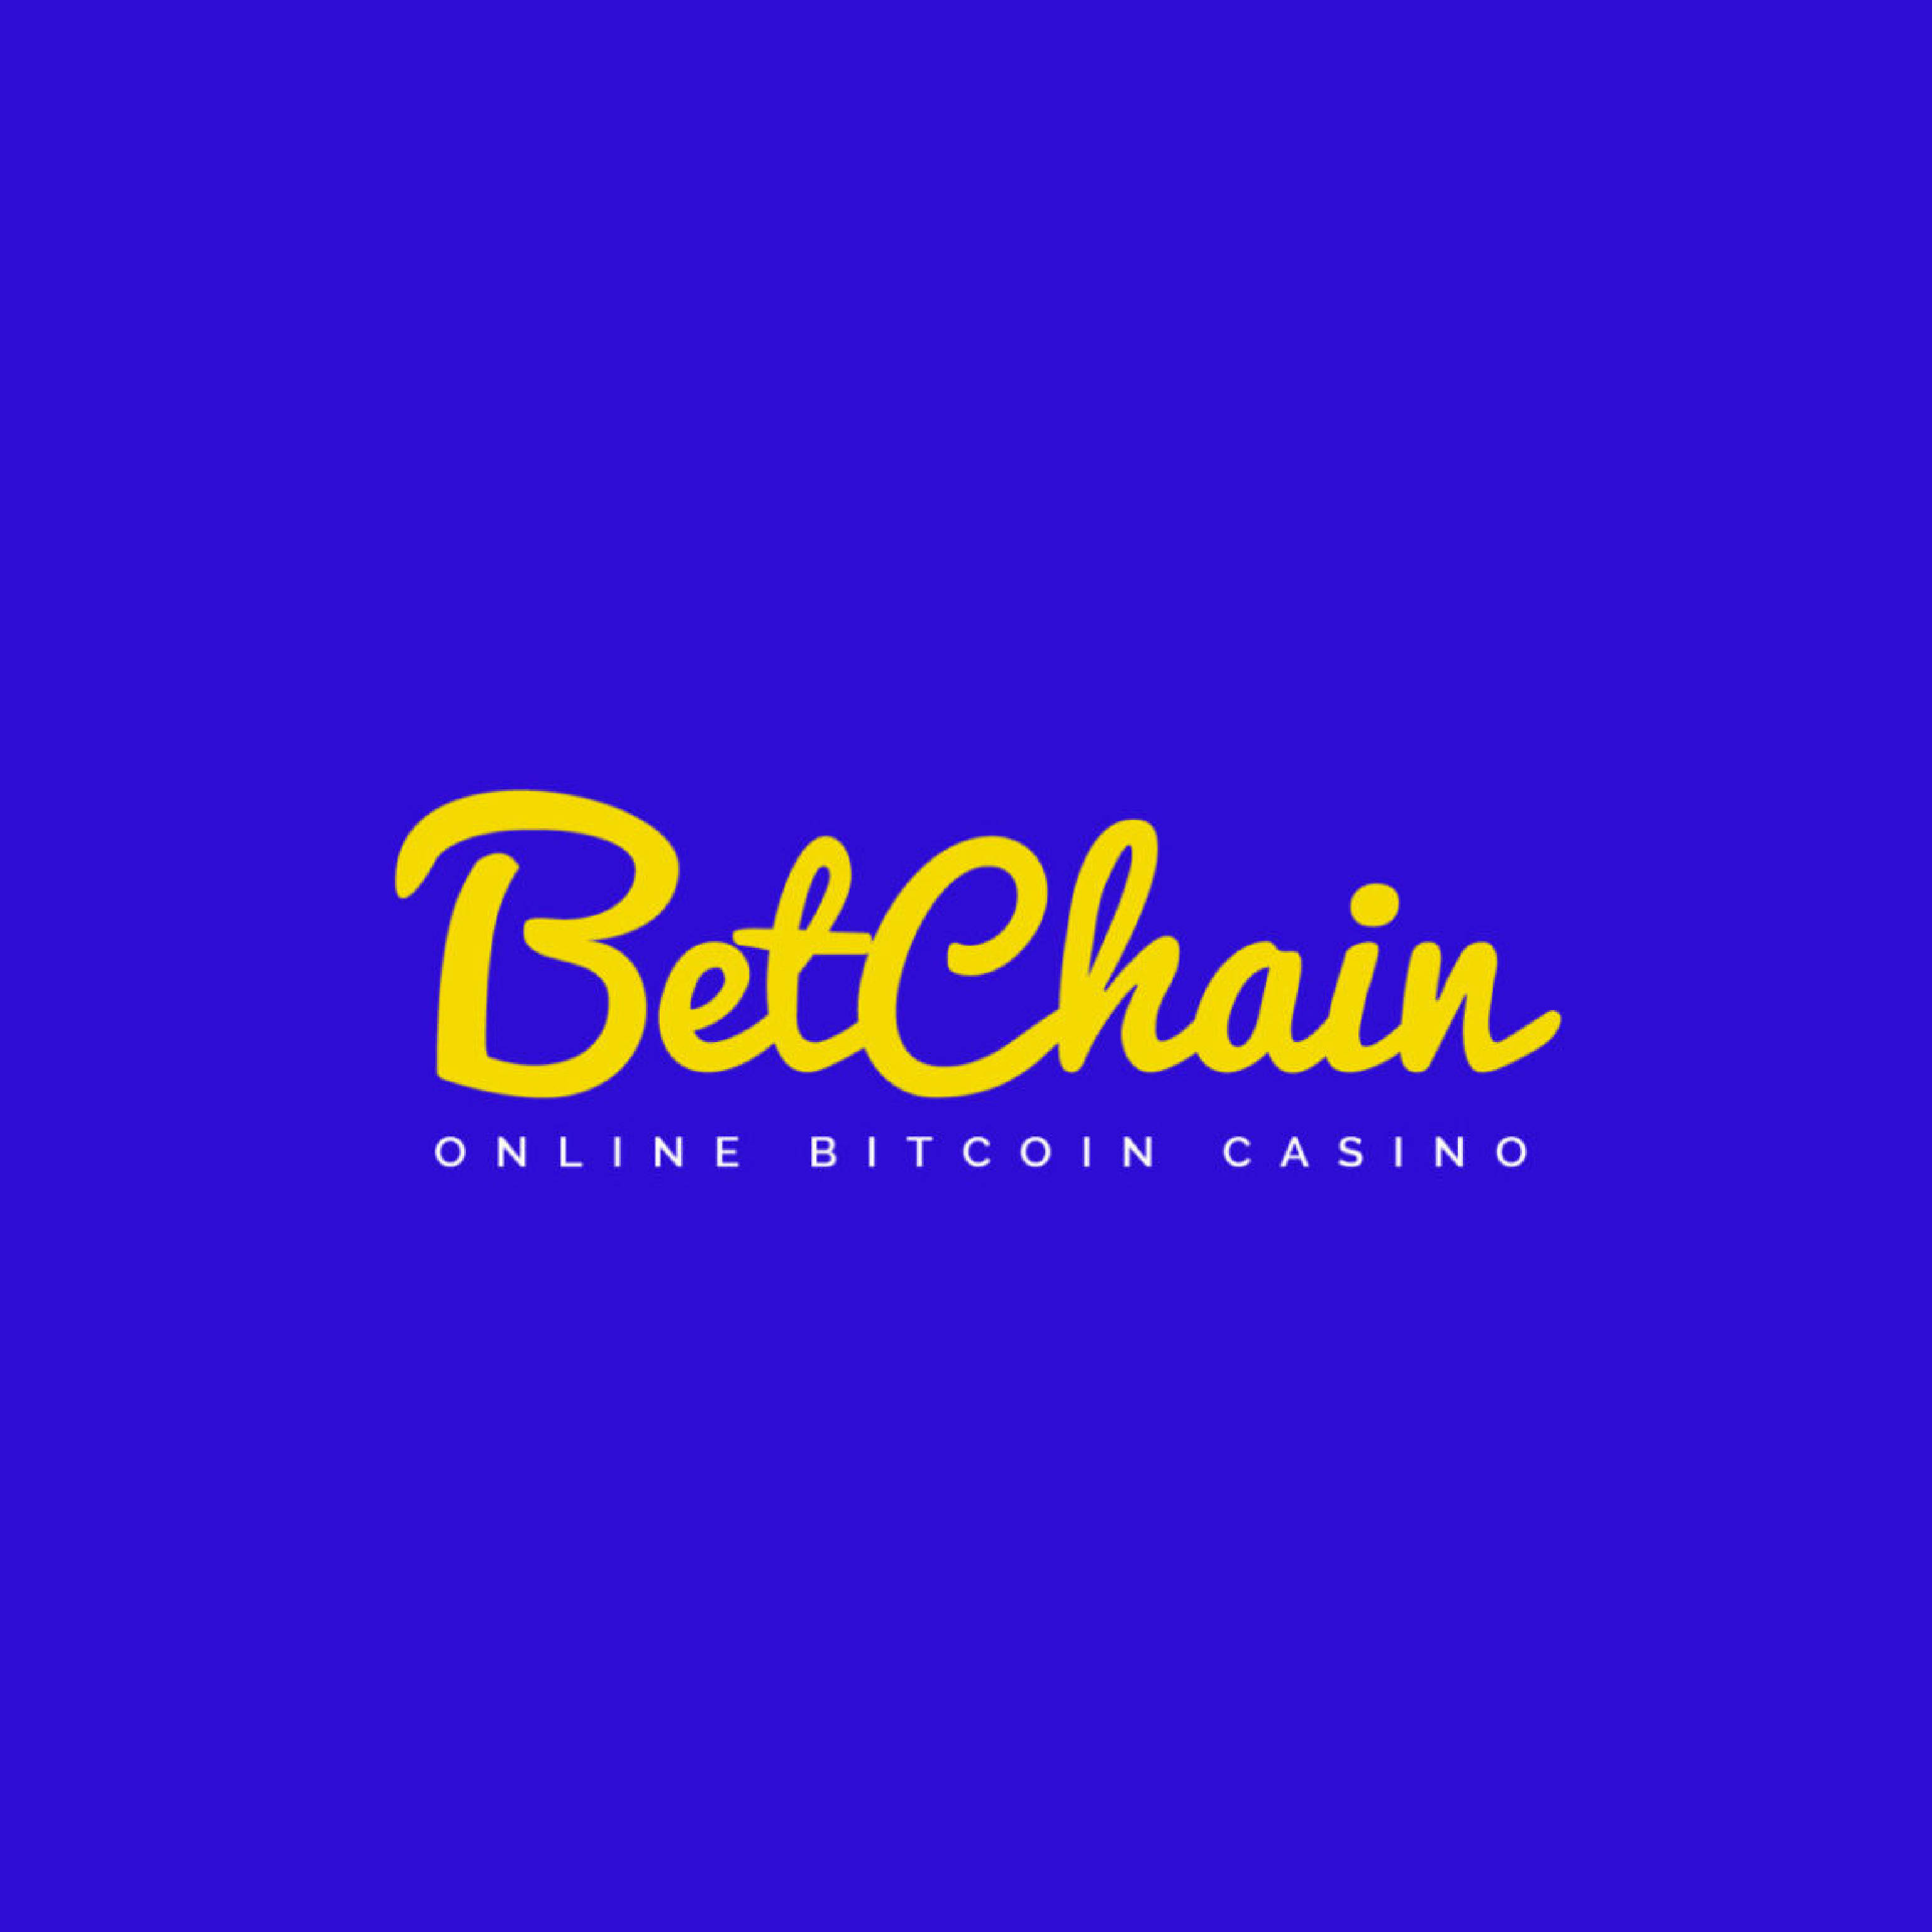 Online casino best deal